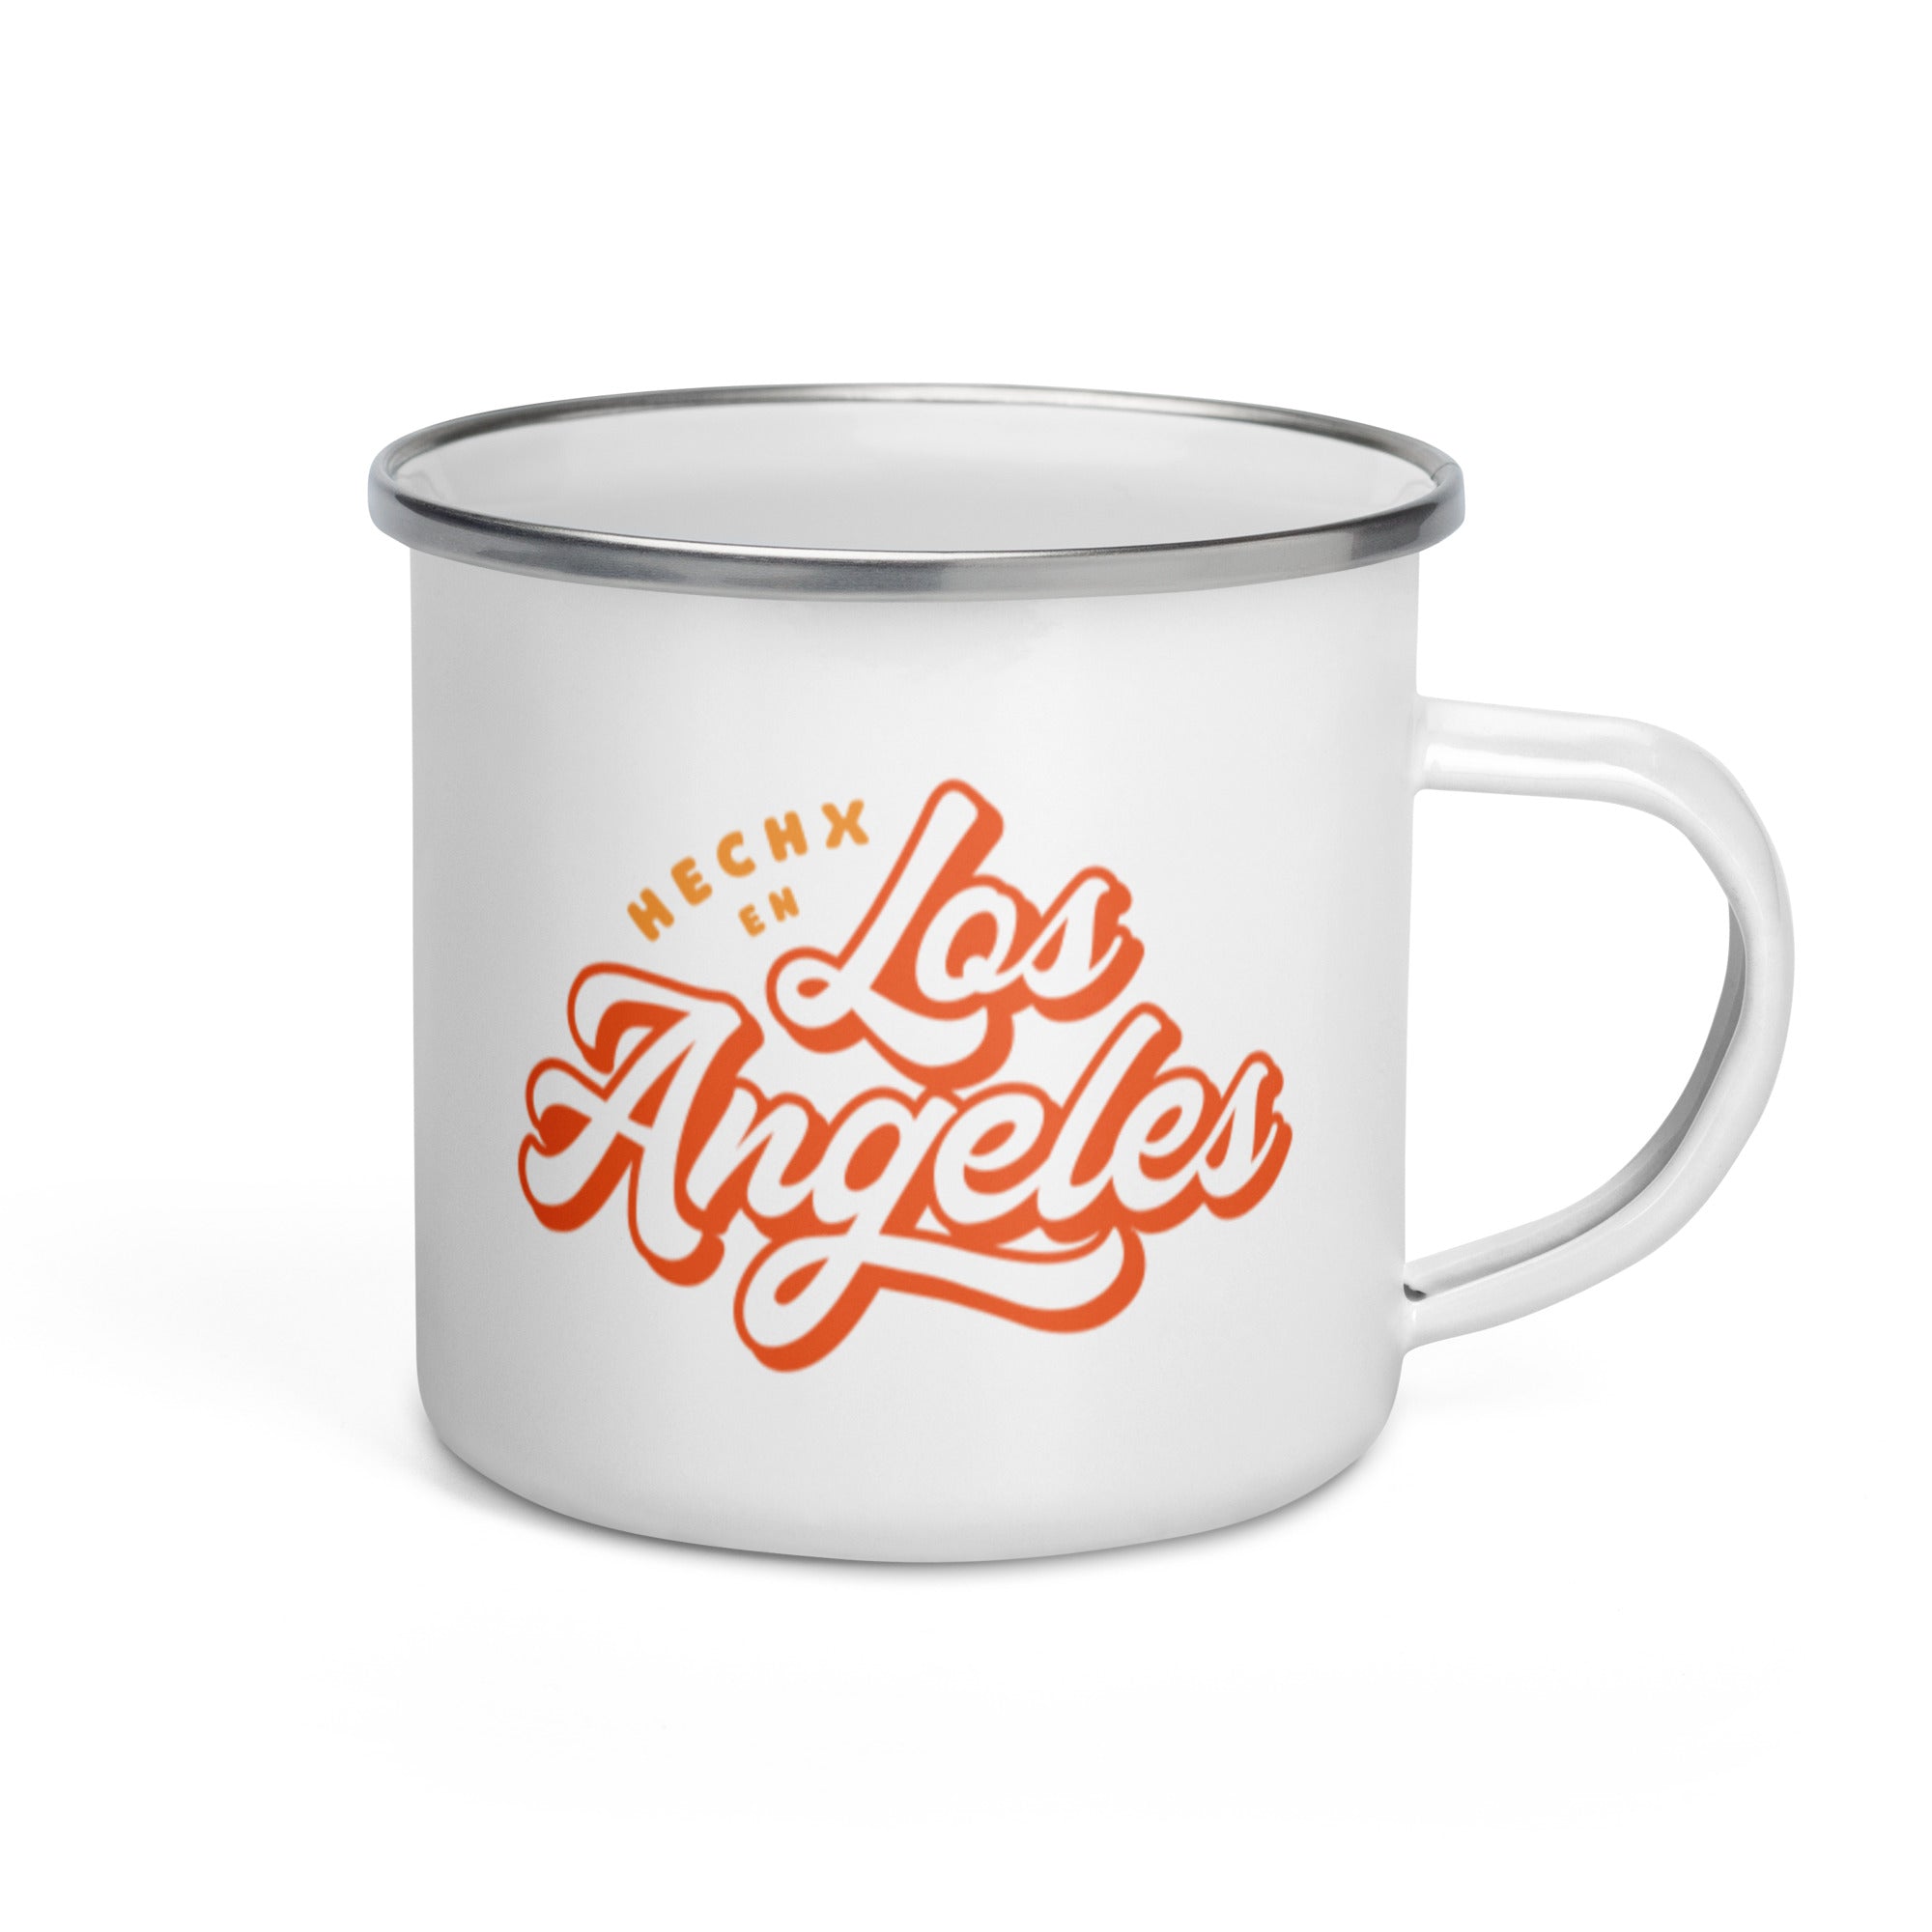 Hechx En Los Angeles Enamel Mug